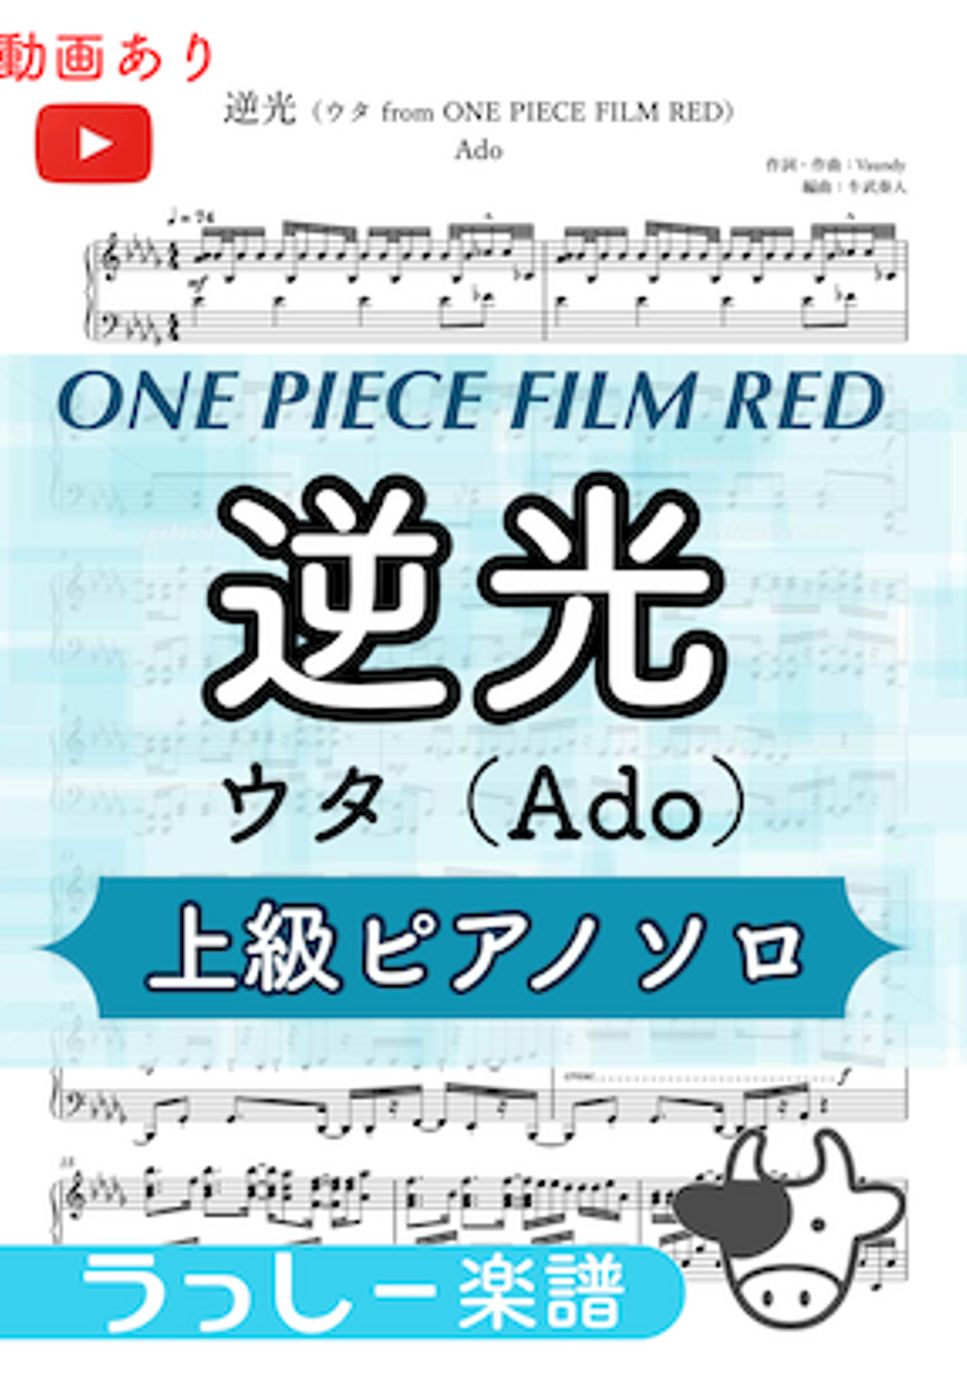 Ado - 逆光 (劇場版アニメ『ONE PIECE FILM RED』) by 牛武奏人